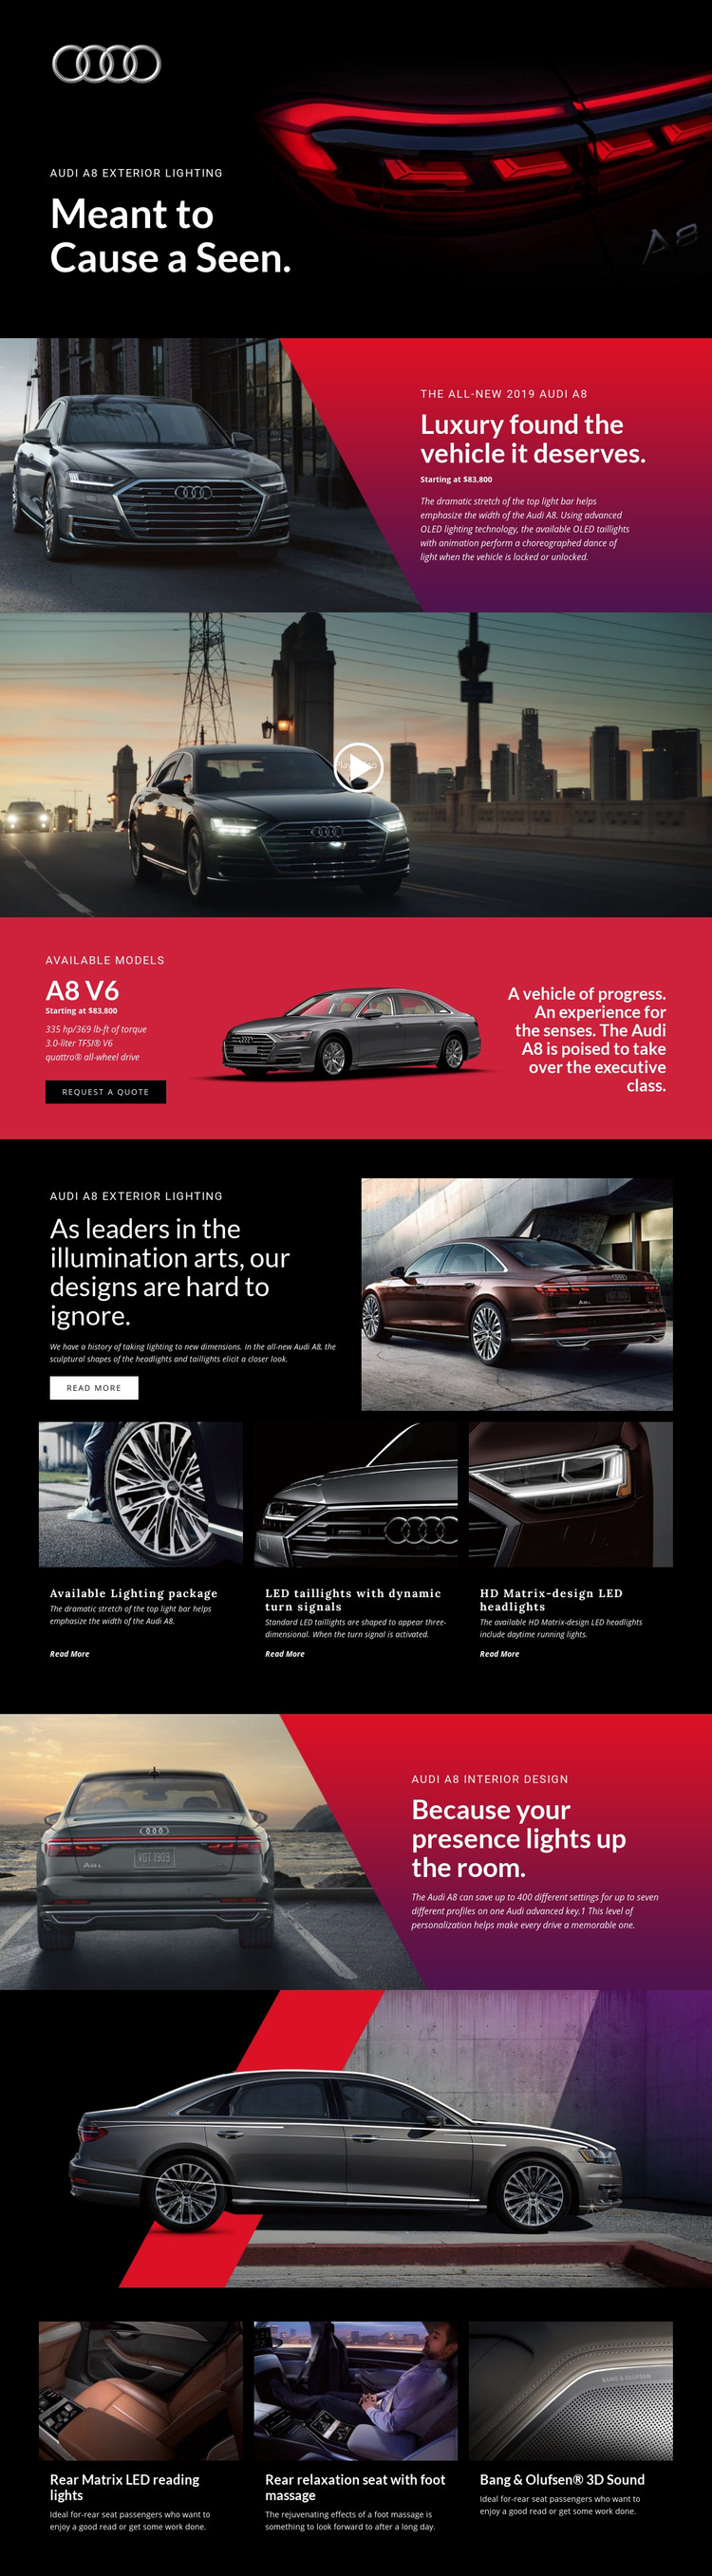 Audi luxury cars Homepage Design